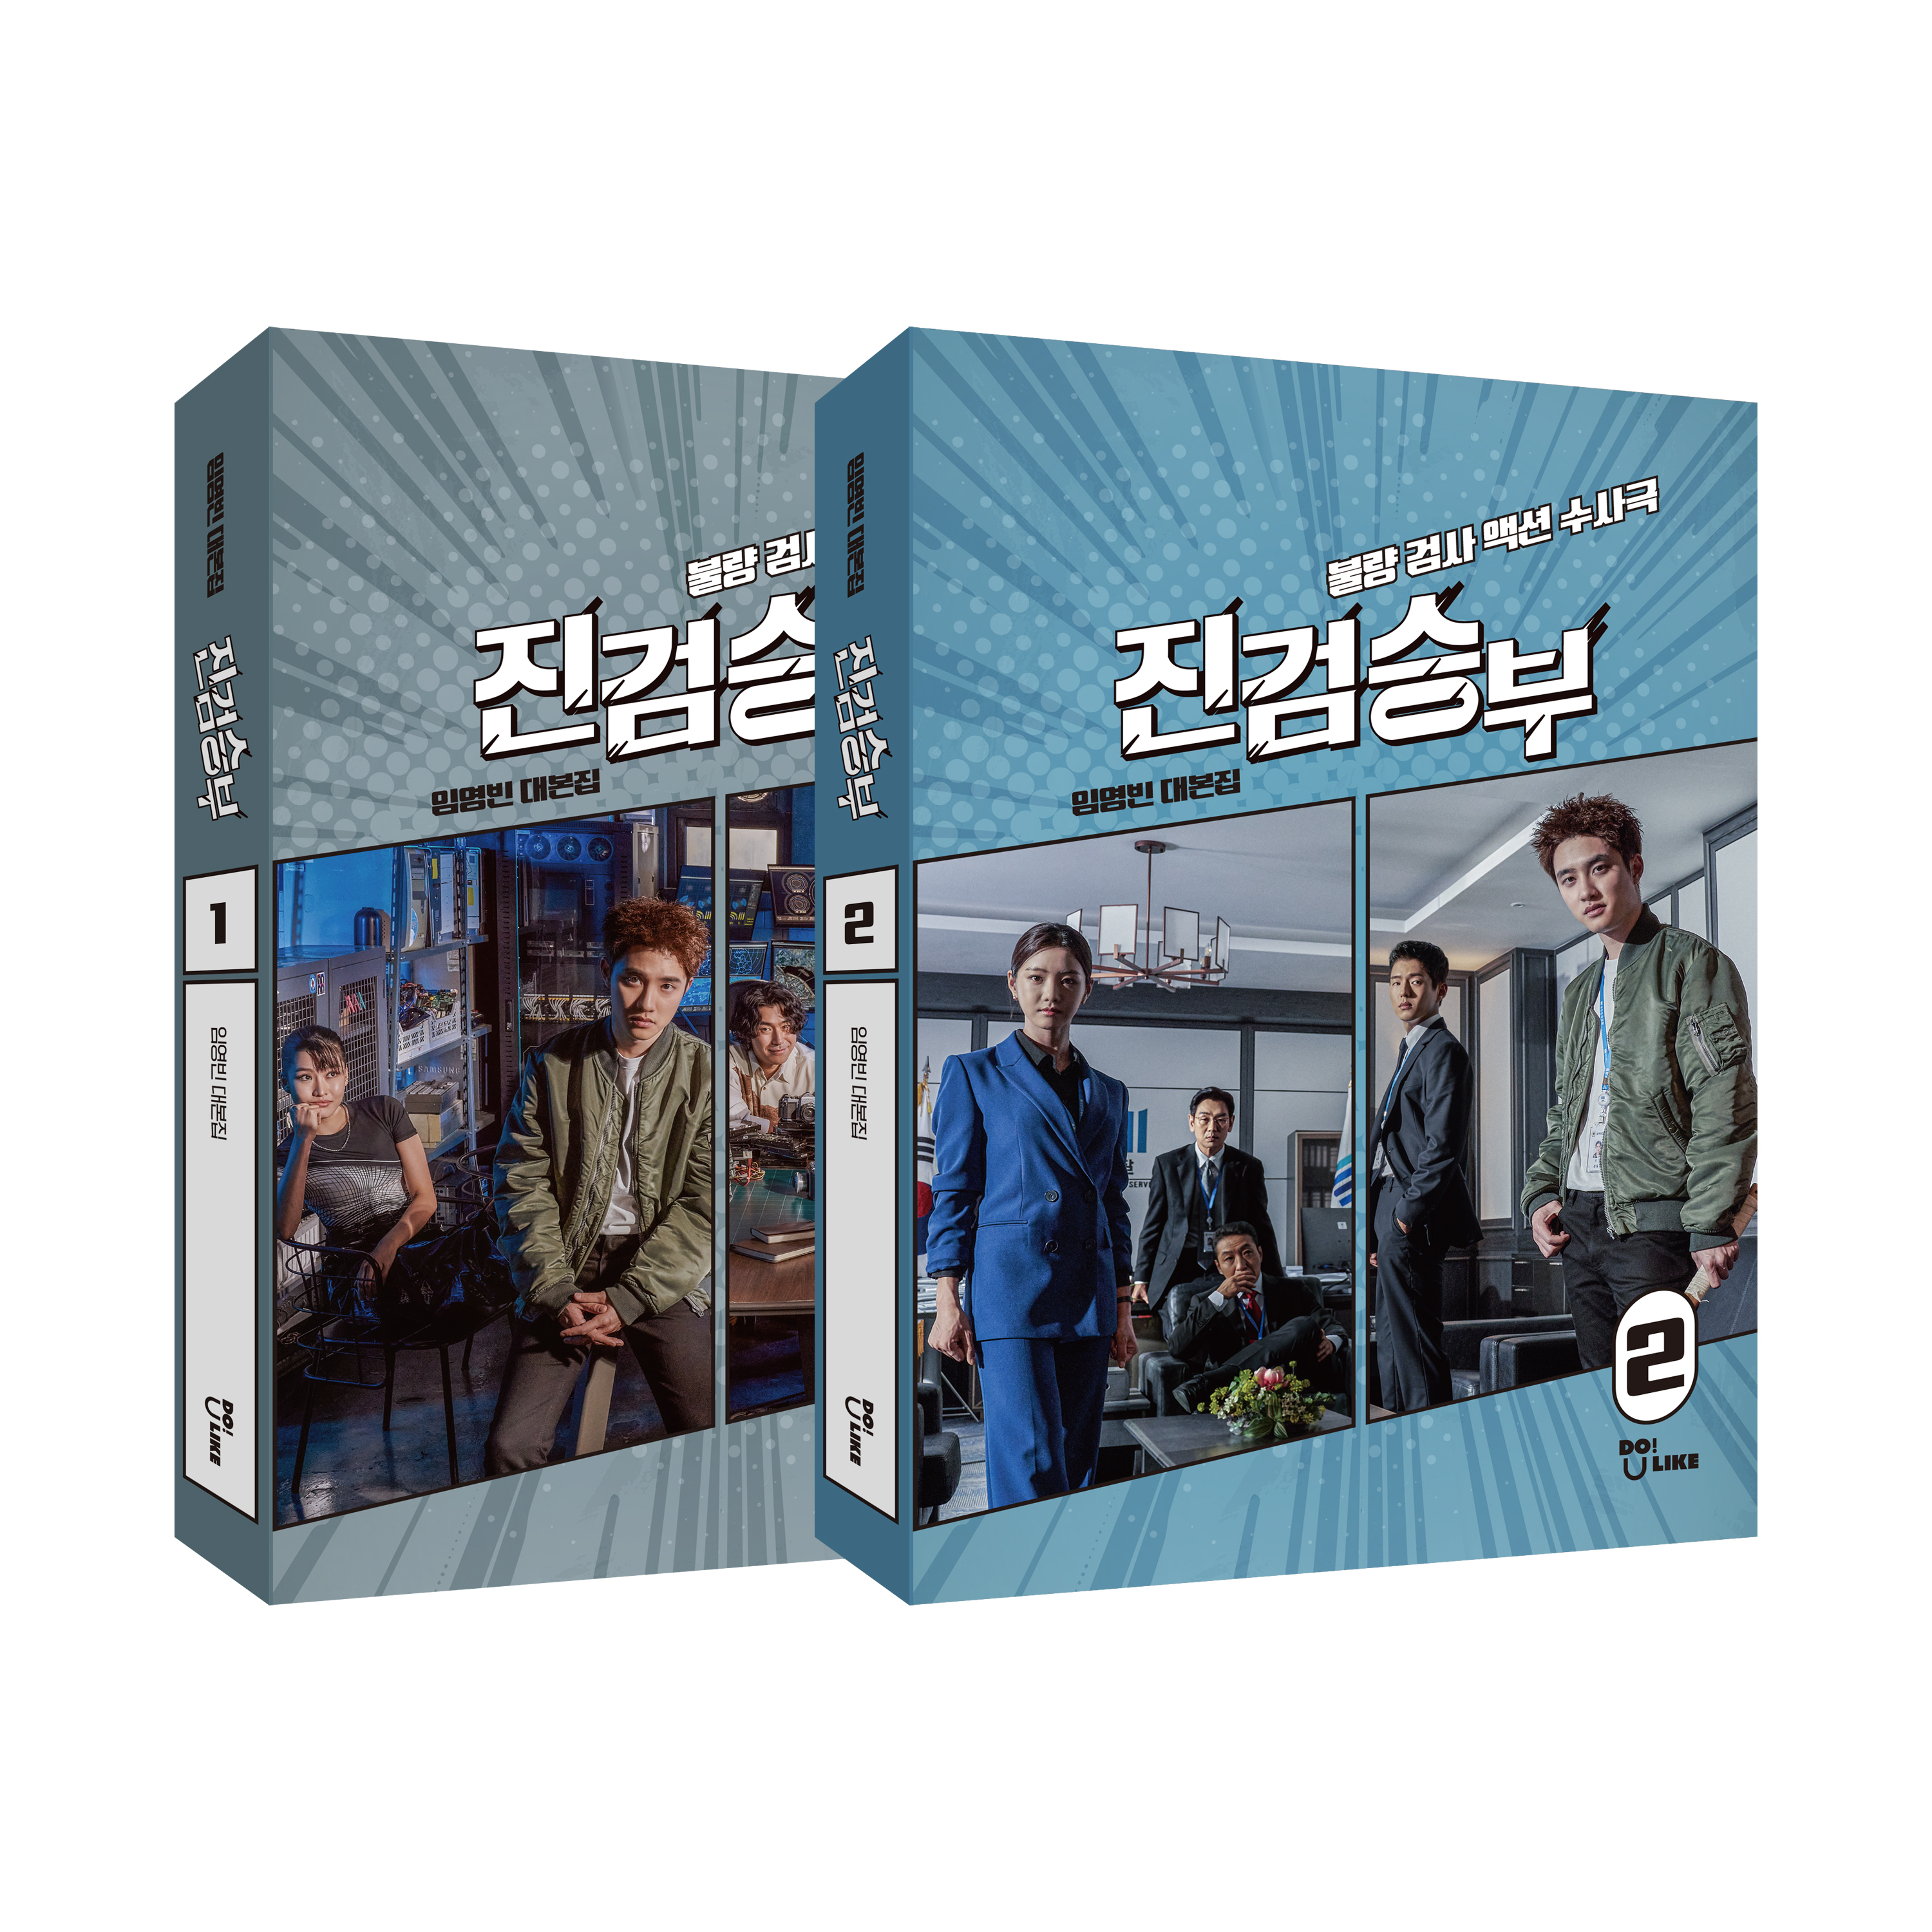 [全款] [套装] [剧本]  Bad Prosecutor 1 + 2 - KBS2 电视剧 _indie散粉团